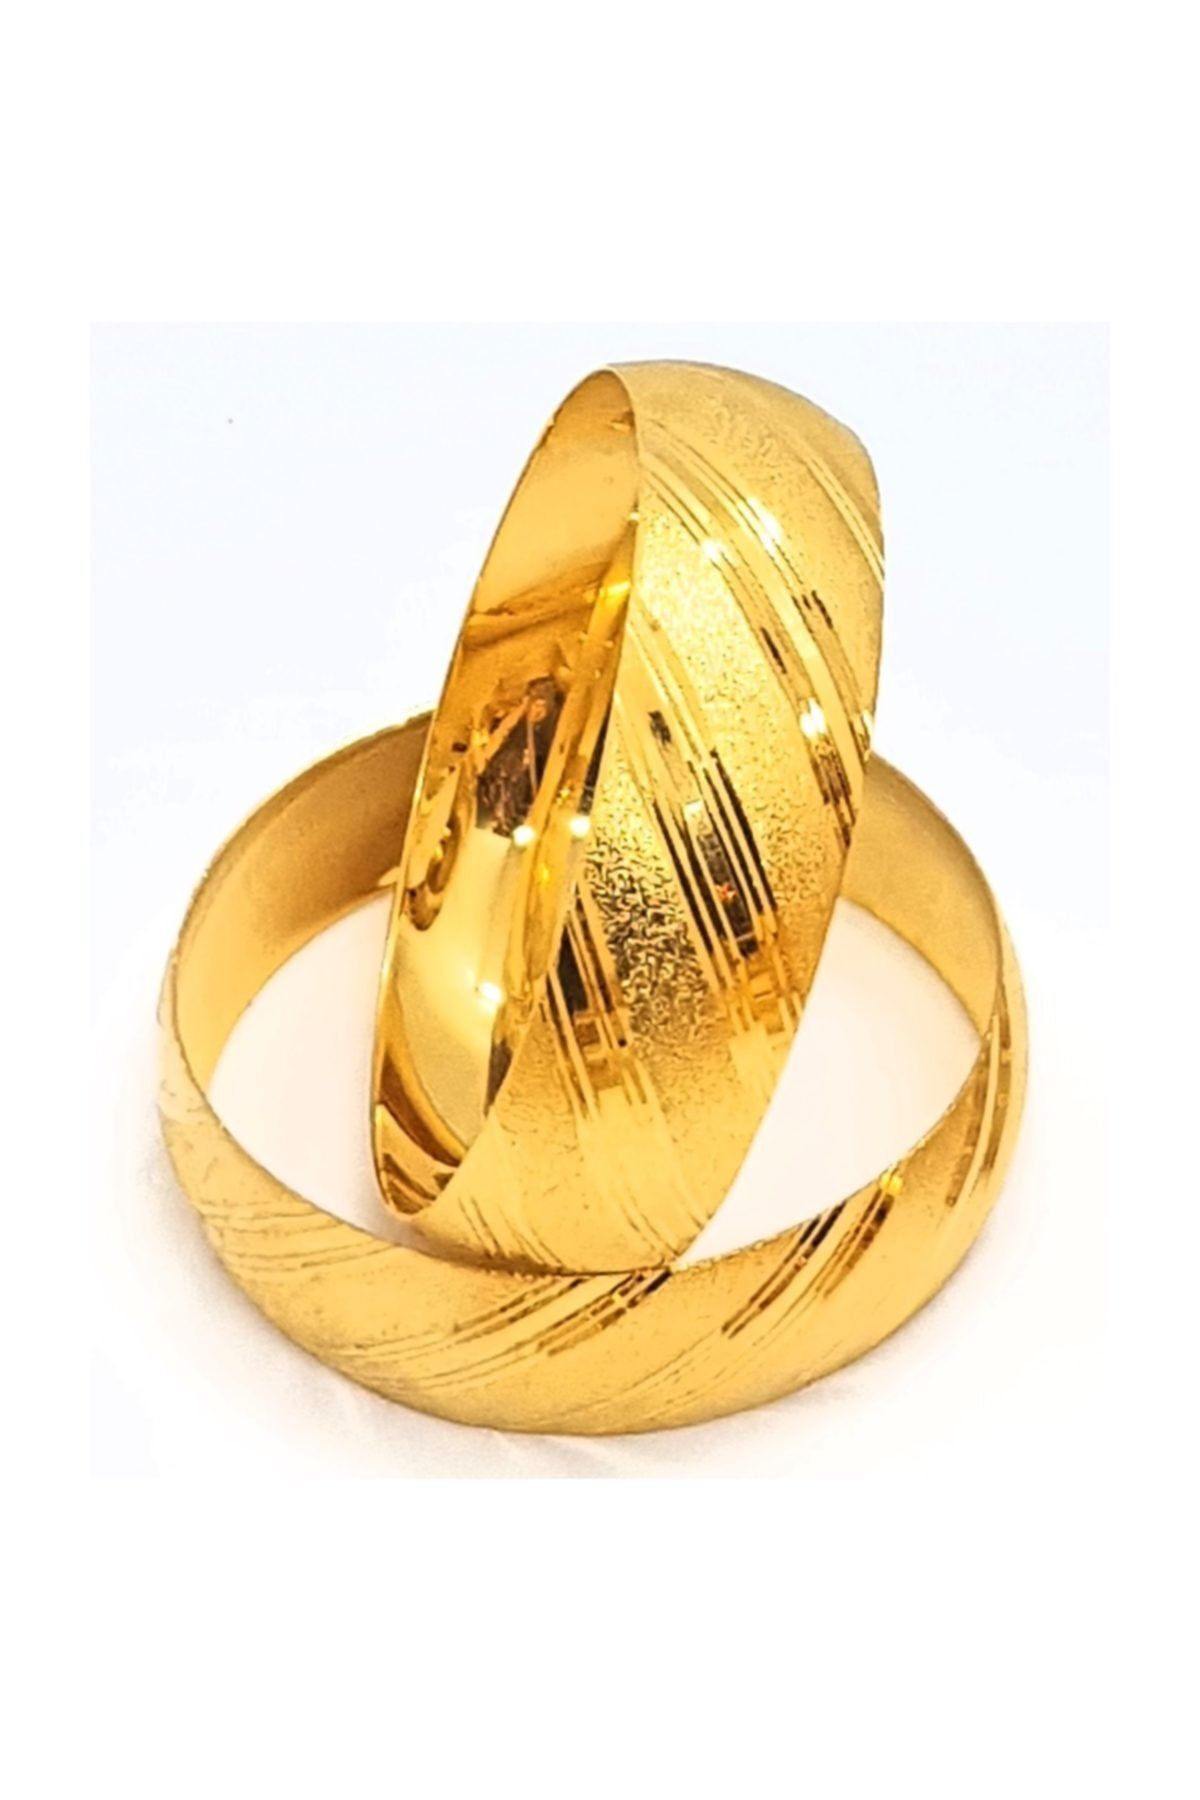 EuroGold Euro Gold Altın Kaplama Bilezik(20 Mmx6.4 Cm)